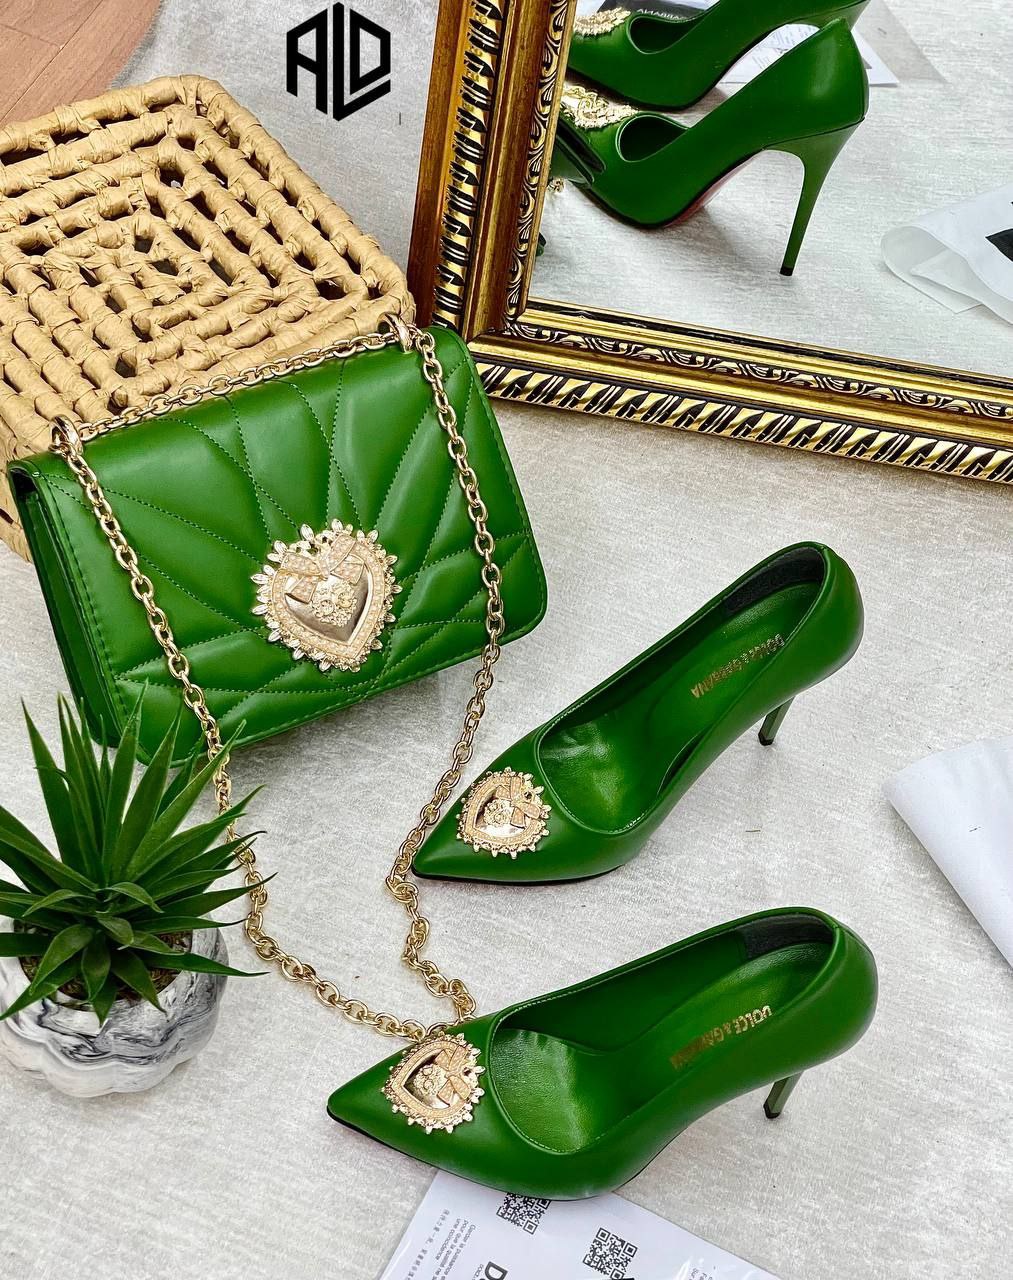 D&G ankle heels and handbag